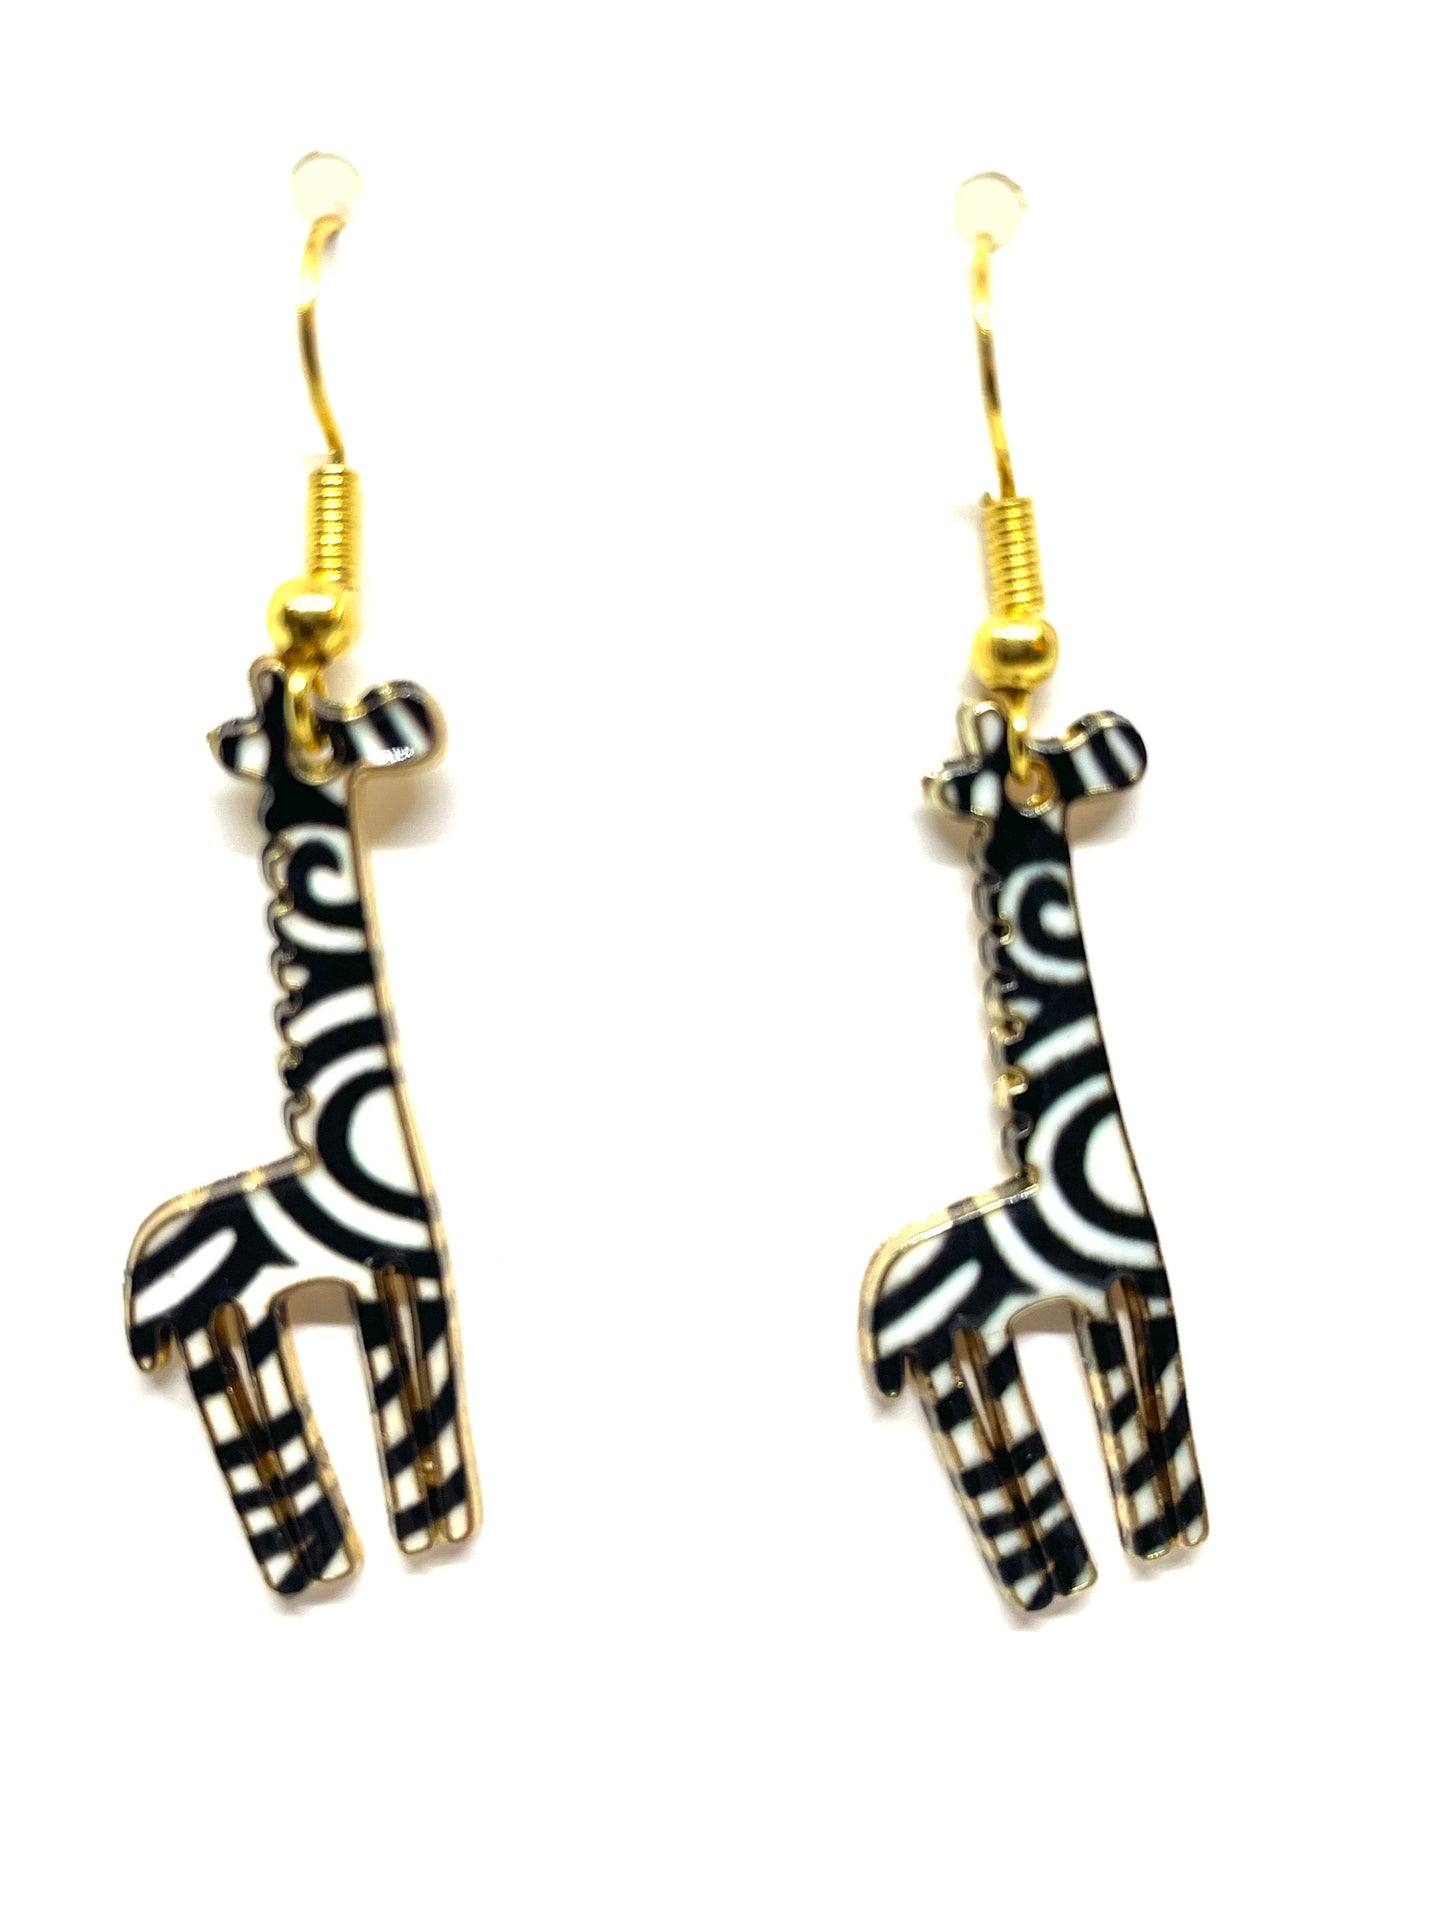 Giraffe Earrings, Stylish Giraffe Earrings, Colorful Giraffe Earrings, Giraffe Jewelry, Wildlife Themed Jewelry, Gift for Her, Christmas